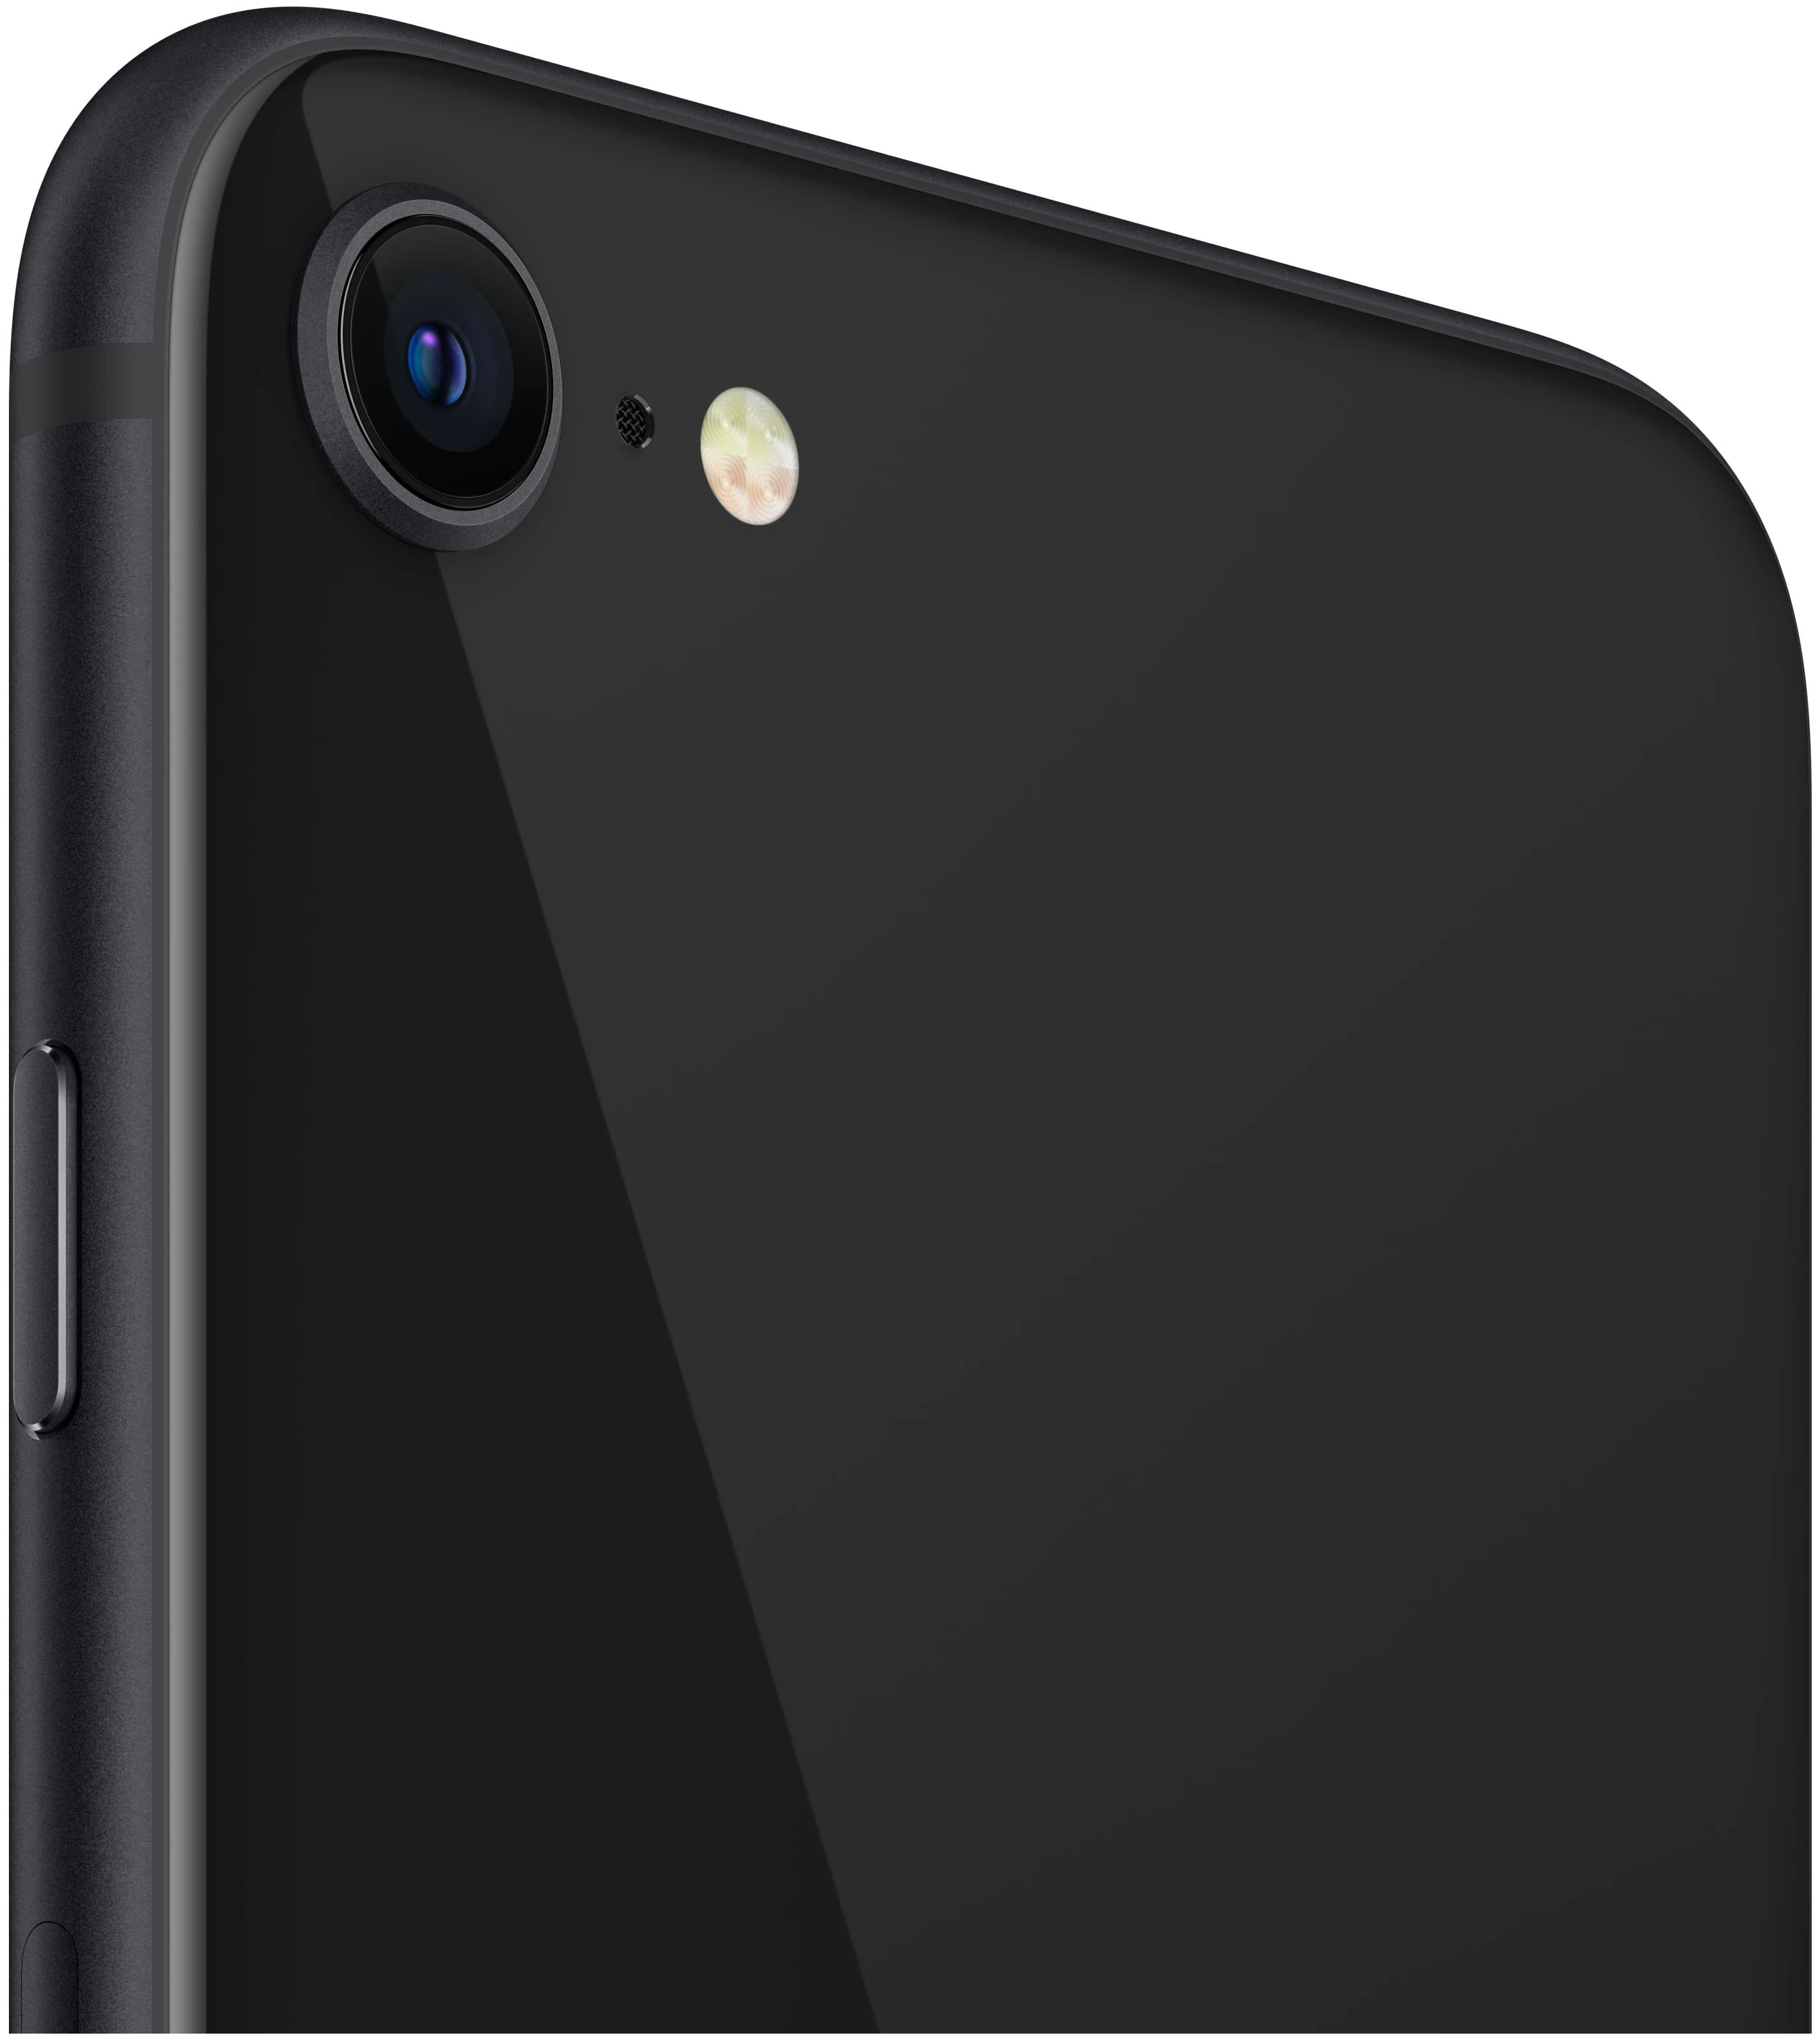 Apple iPhone SE 2020 64GB - интернет: 4G LTE